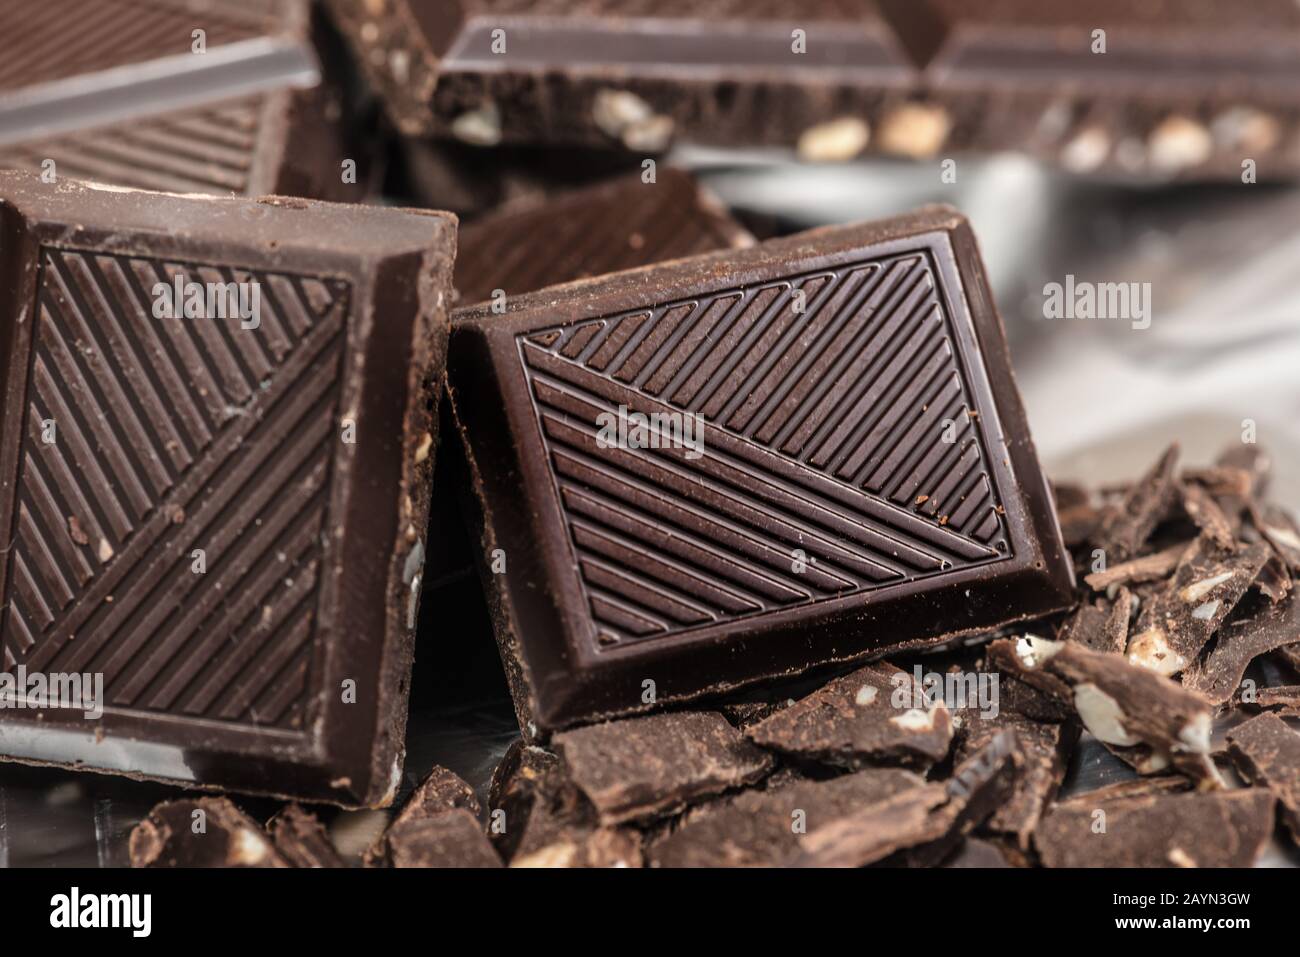 Barra de chocolate pone trozos de fondo con nuez de almendra, cerca Foto de stock